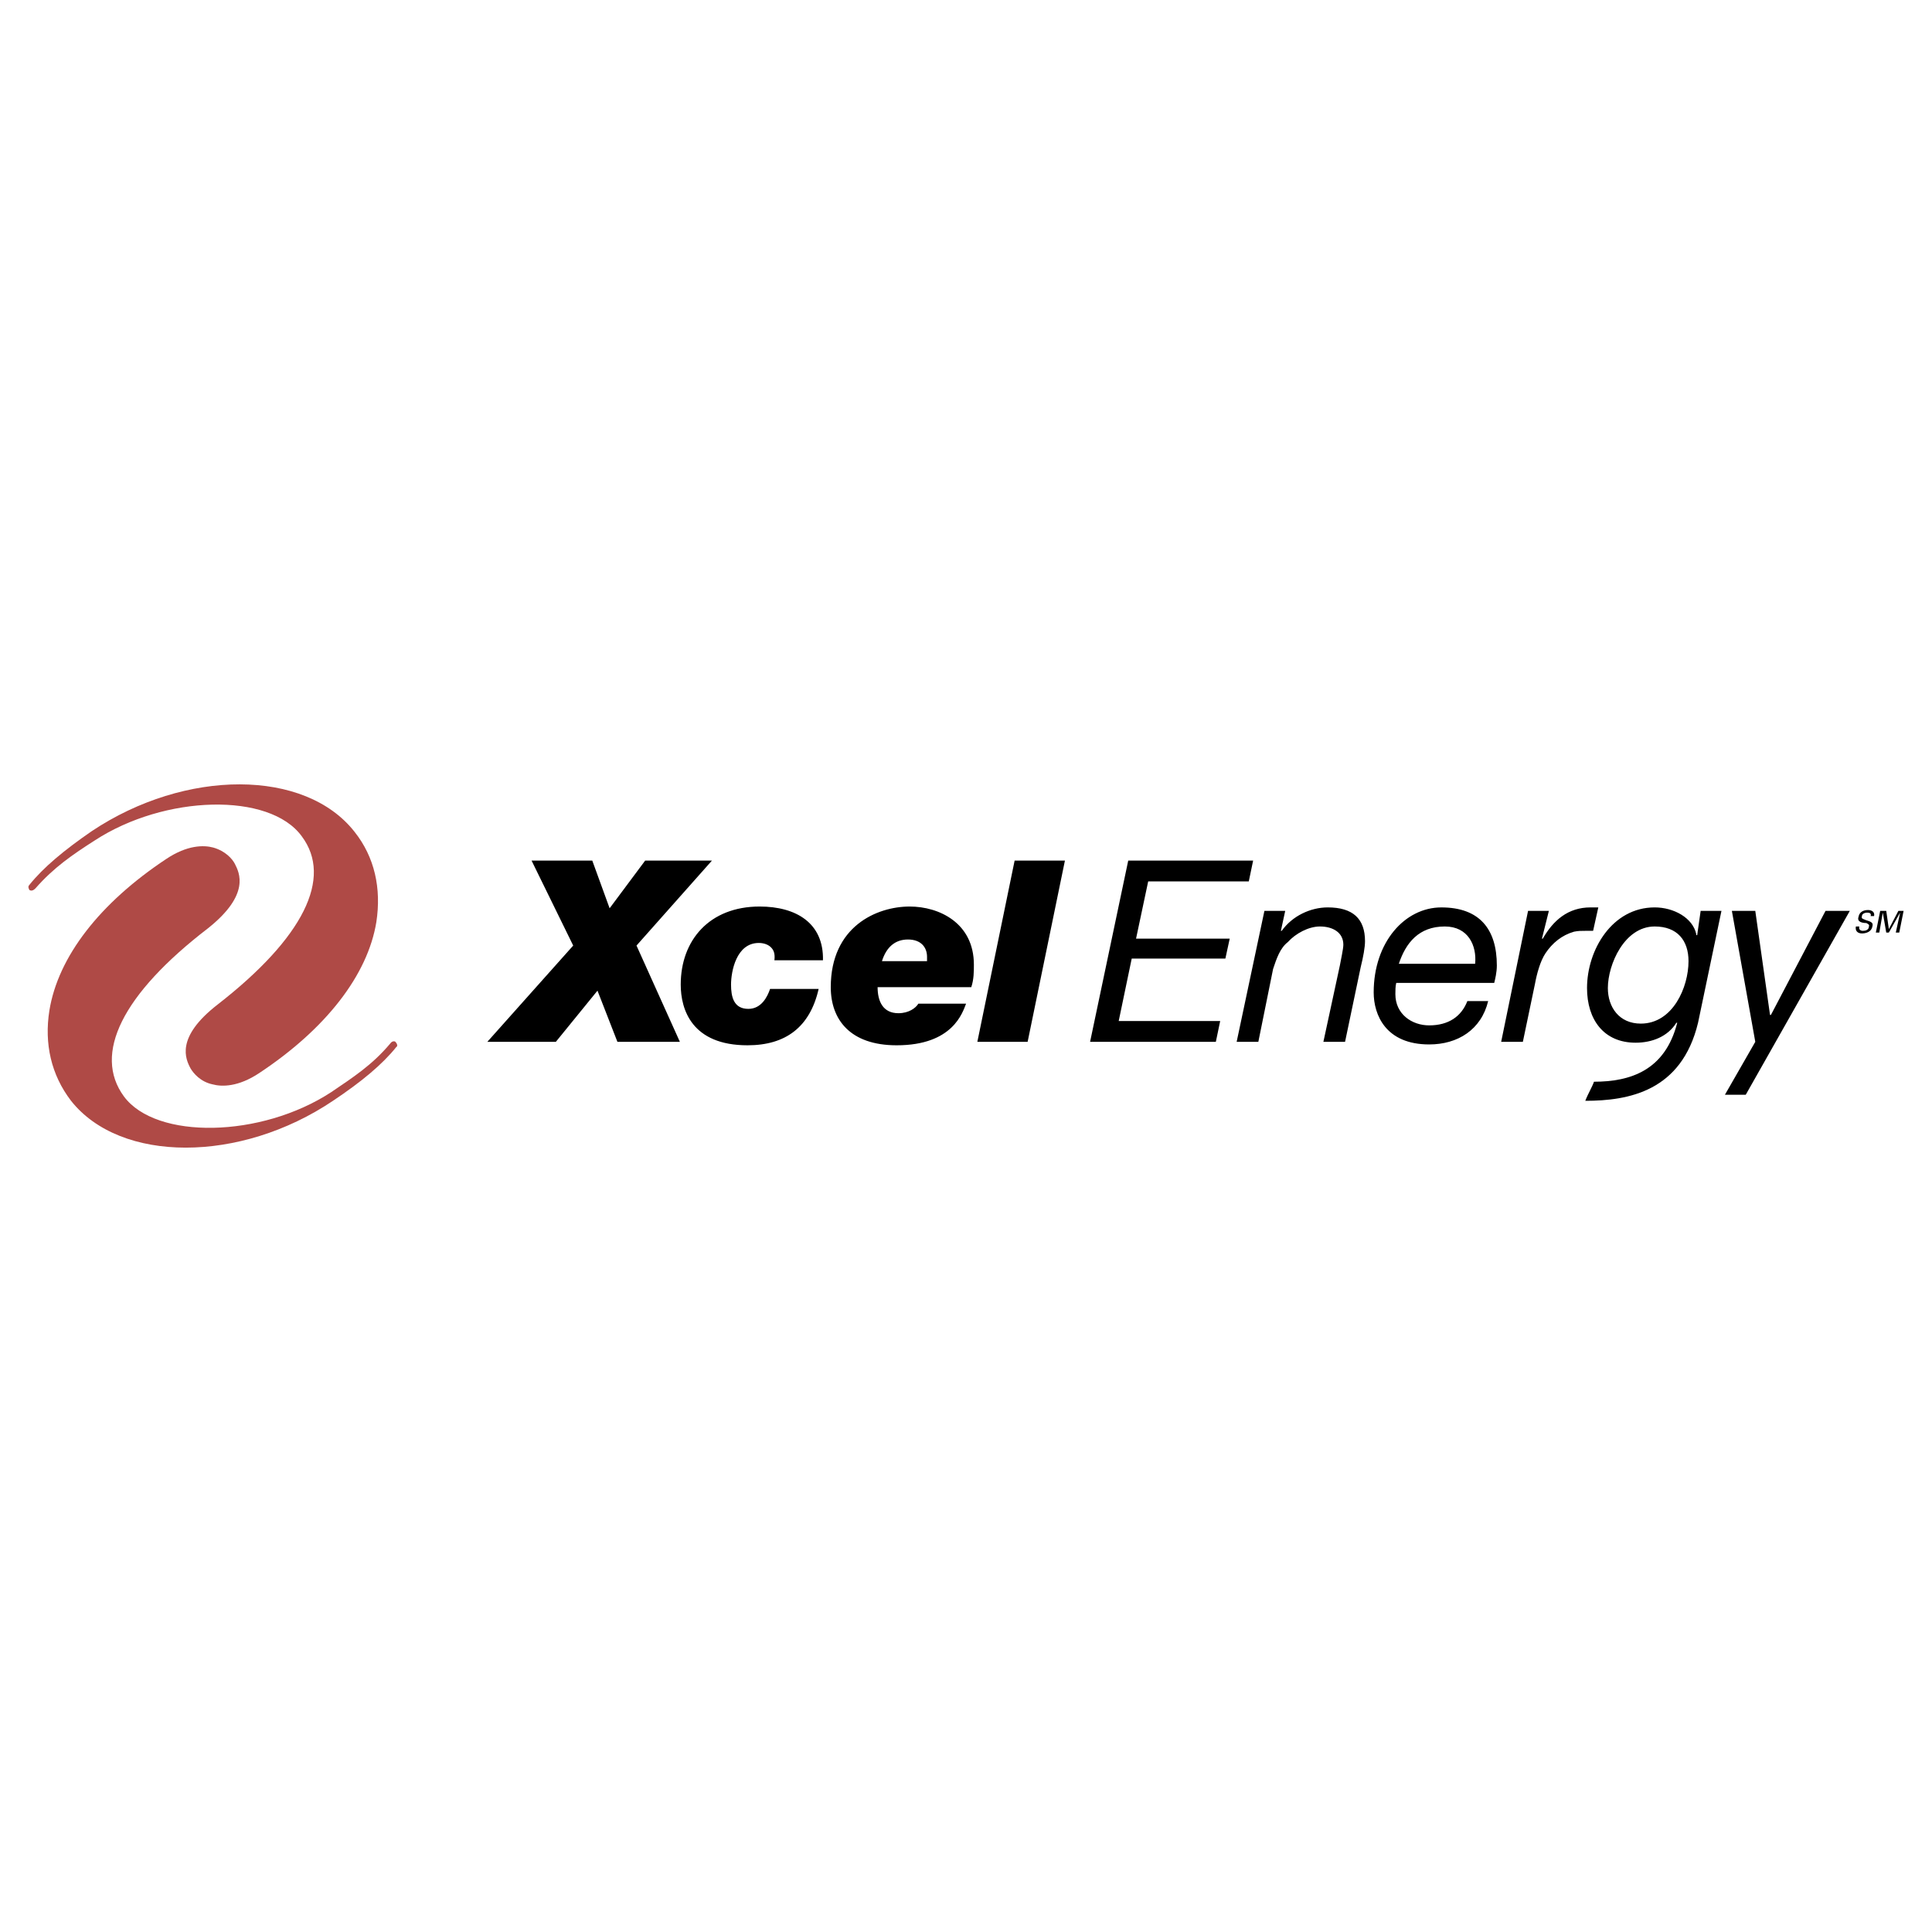 Xcel Energy logo colors